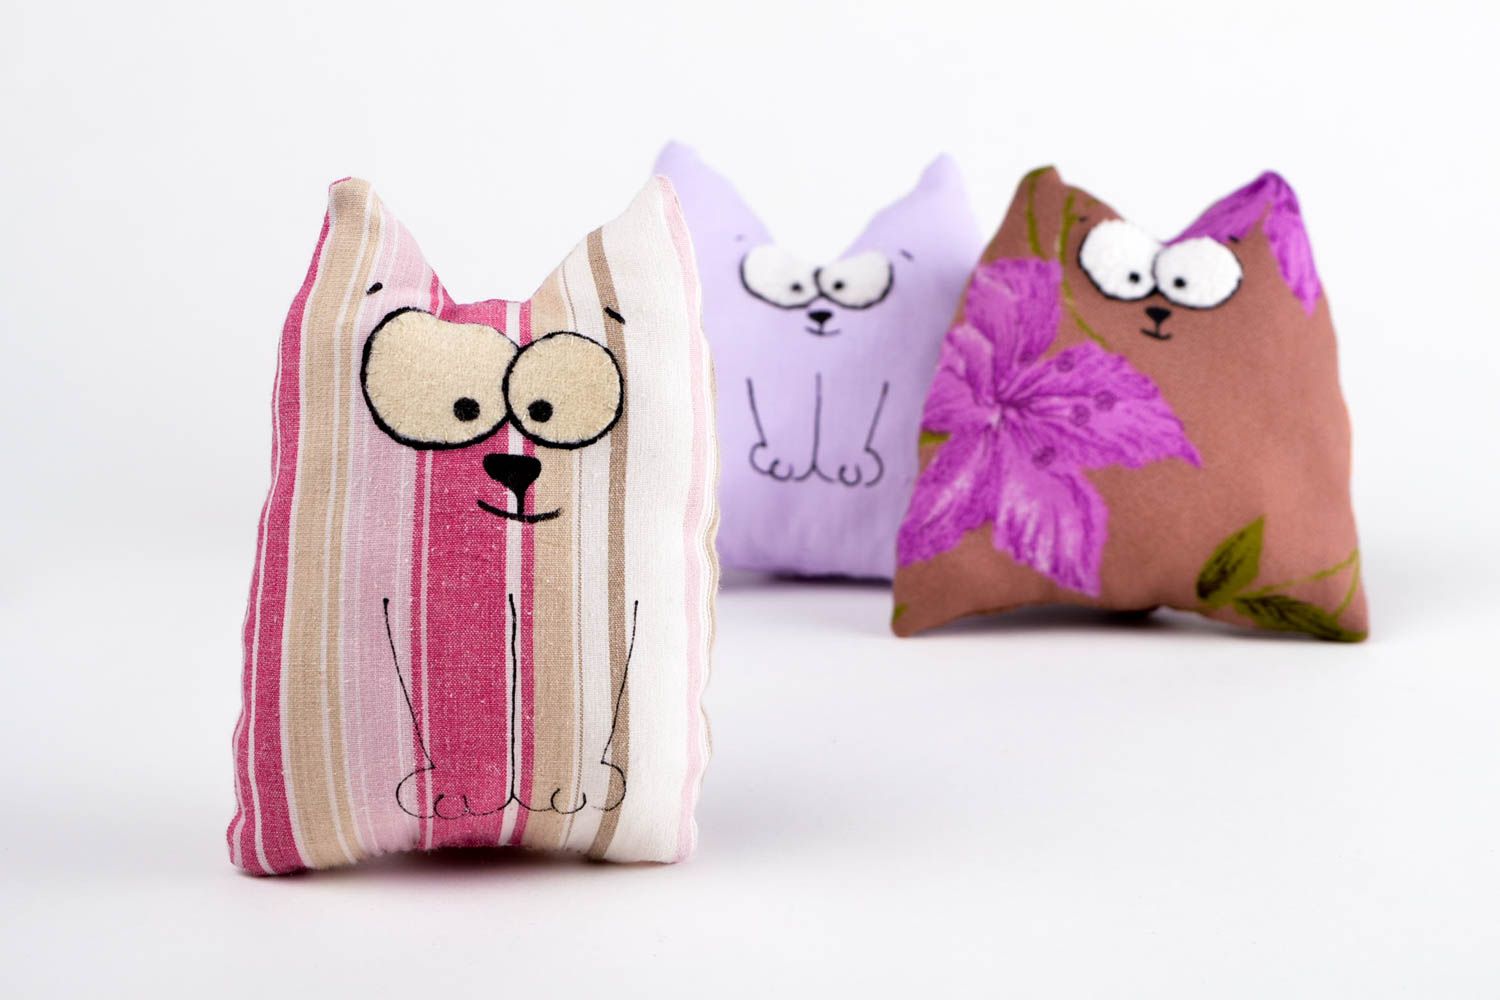 Handmade textile cute toy unusual cat stylish toy interior decor ideas photo 1